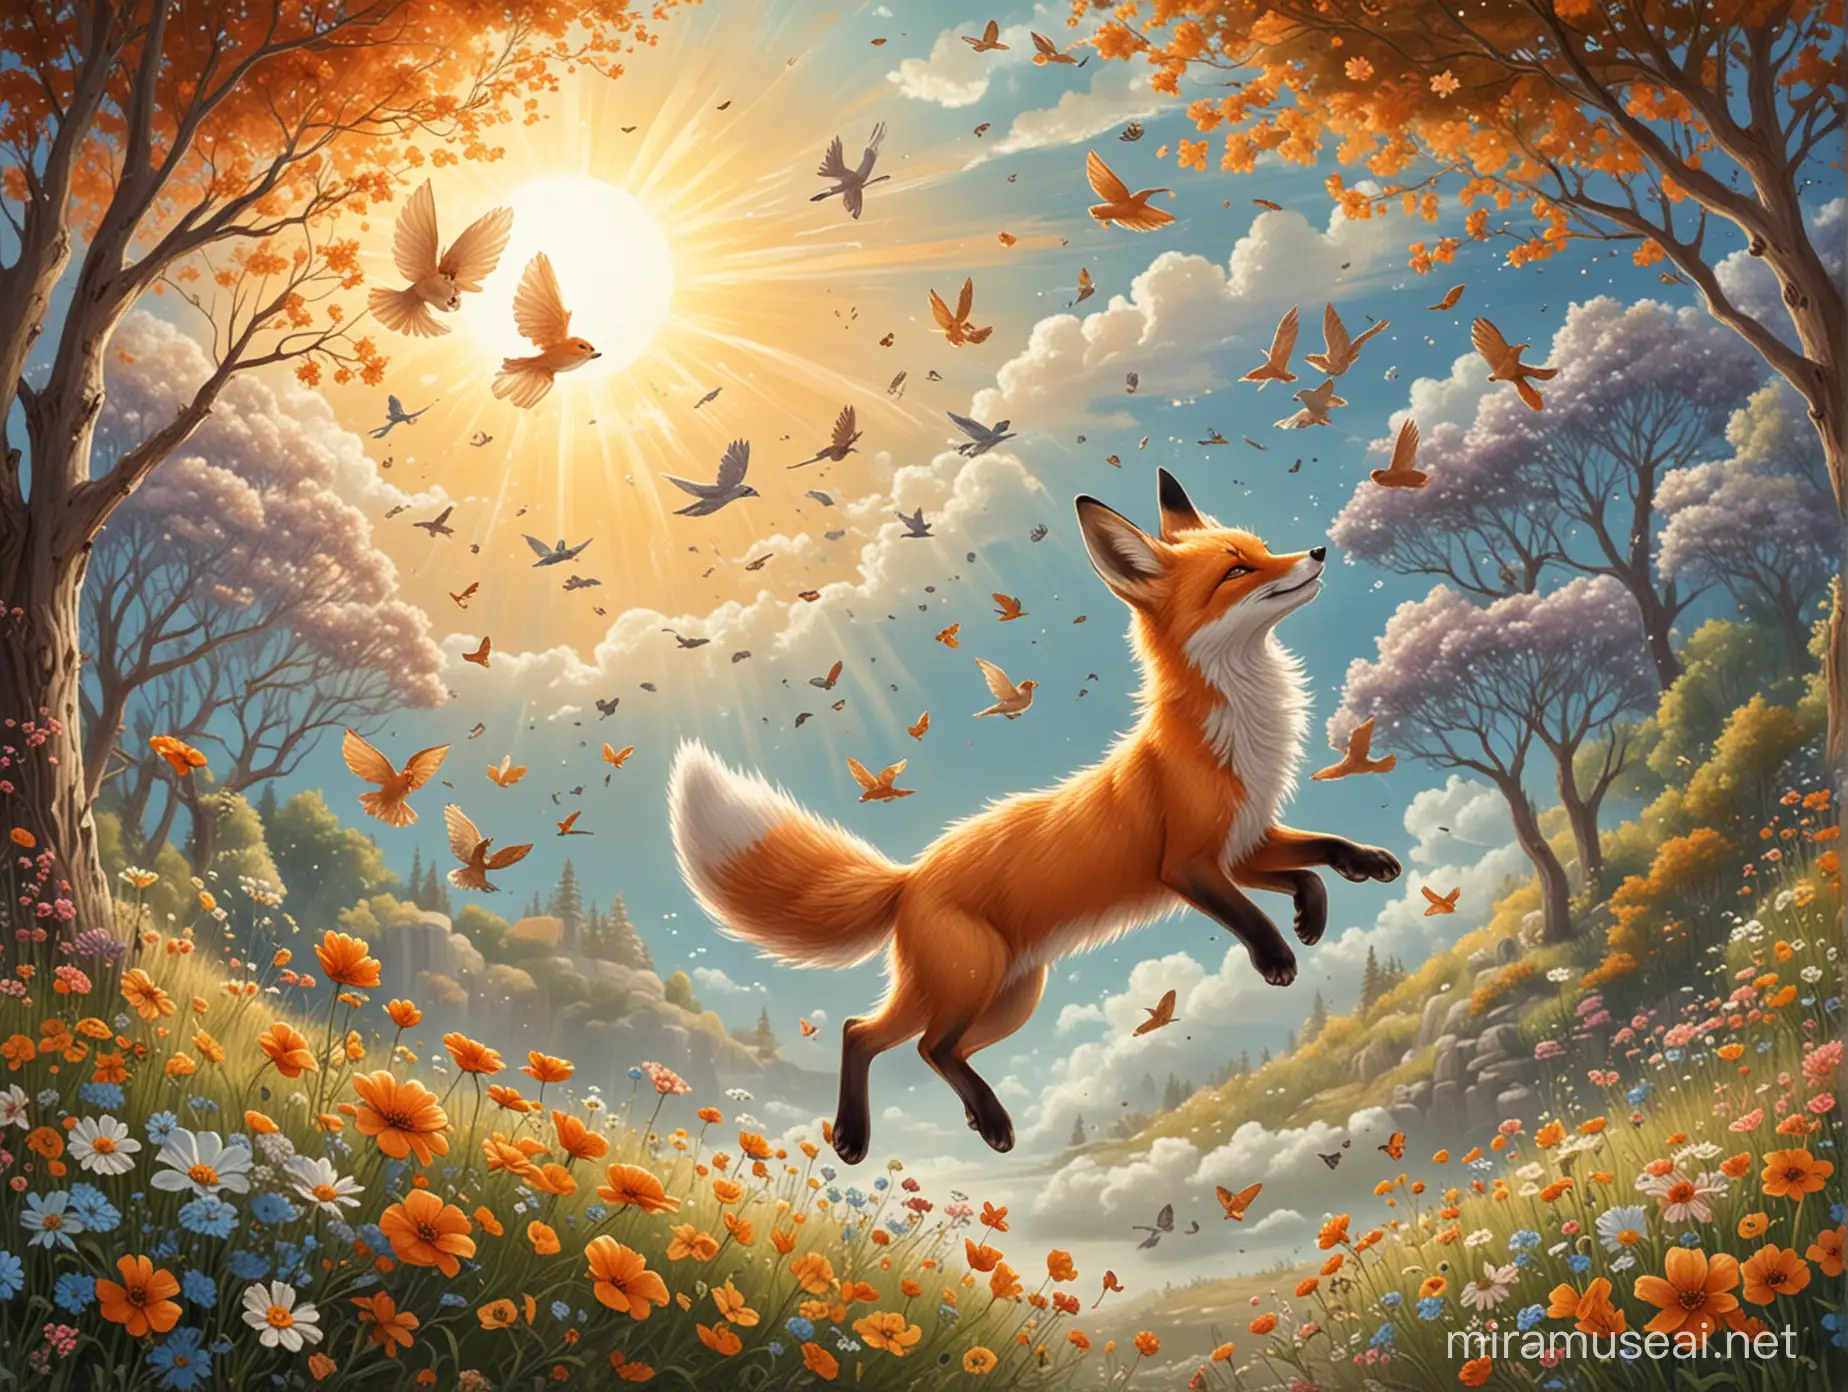 Whimsical art, a cute fox, a cute rabbit, trees, flowers around, the sun in the sky, birds flying